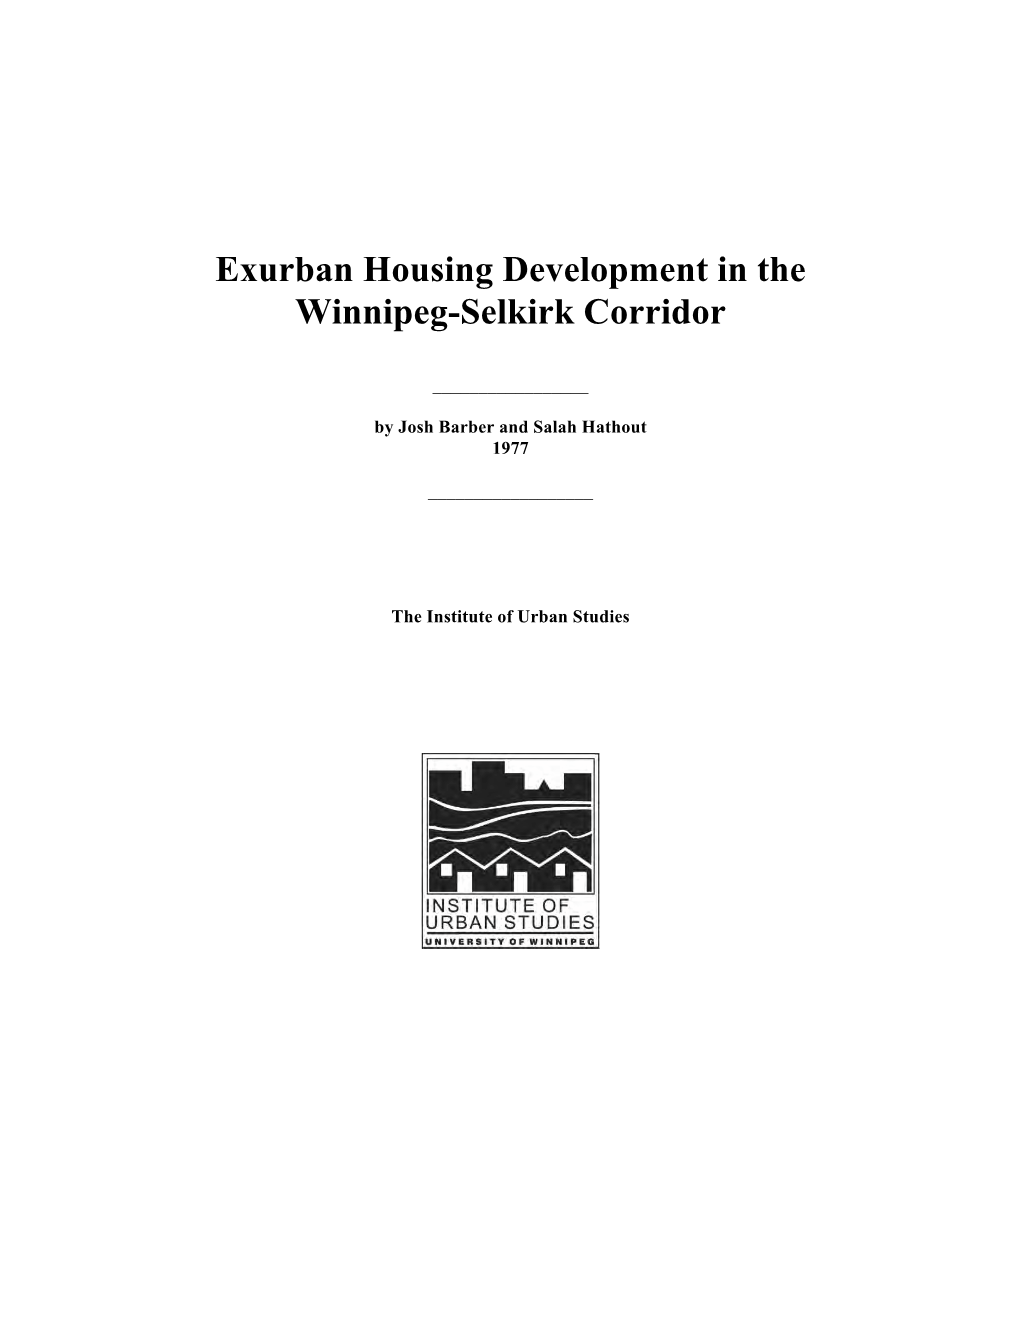 Exurban Housing Development in the Winnipeg-Selkirk Corridor